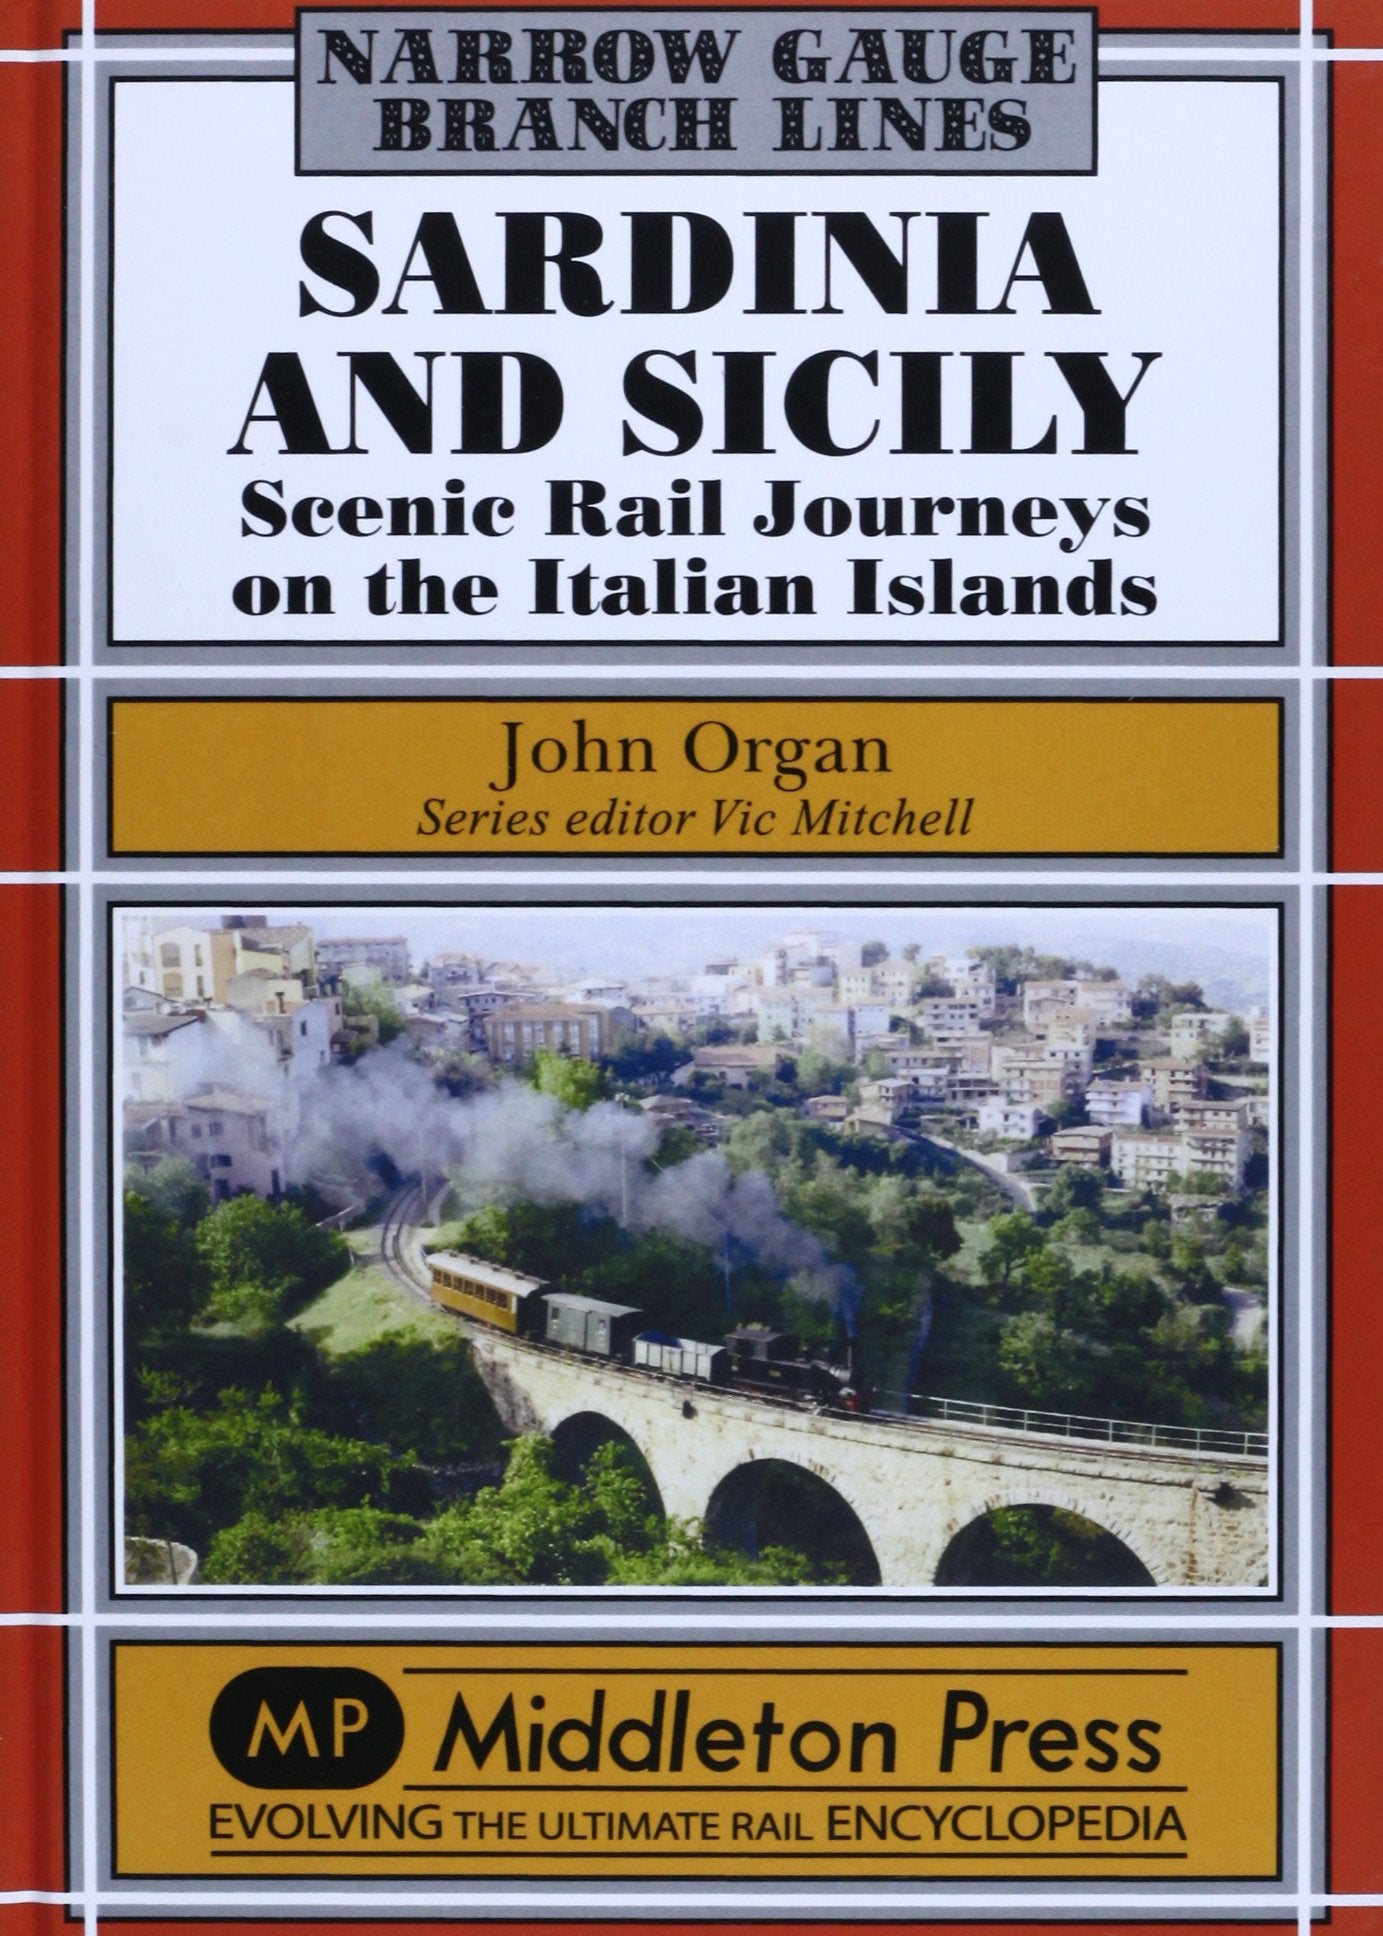 Narrow Gauge Sardinia and Sicily Narrow Gauge Scenic Rail Journeys on the Italian Islands